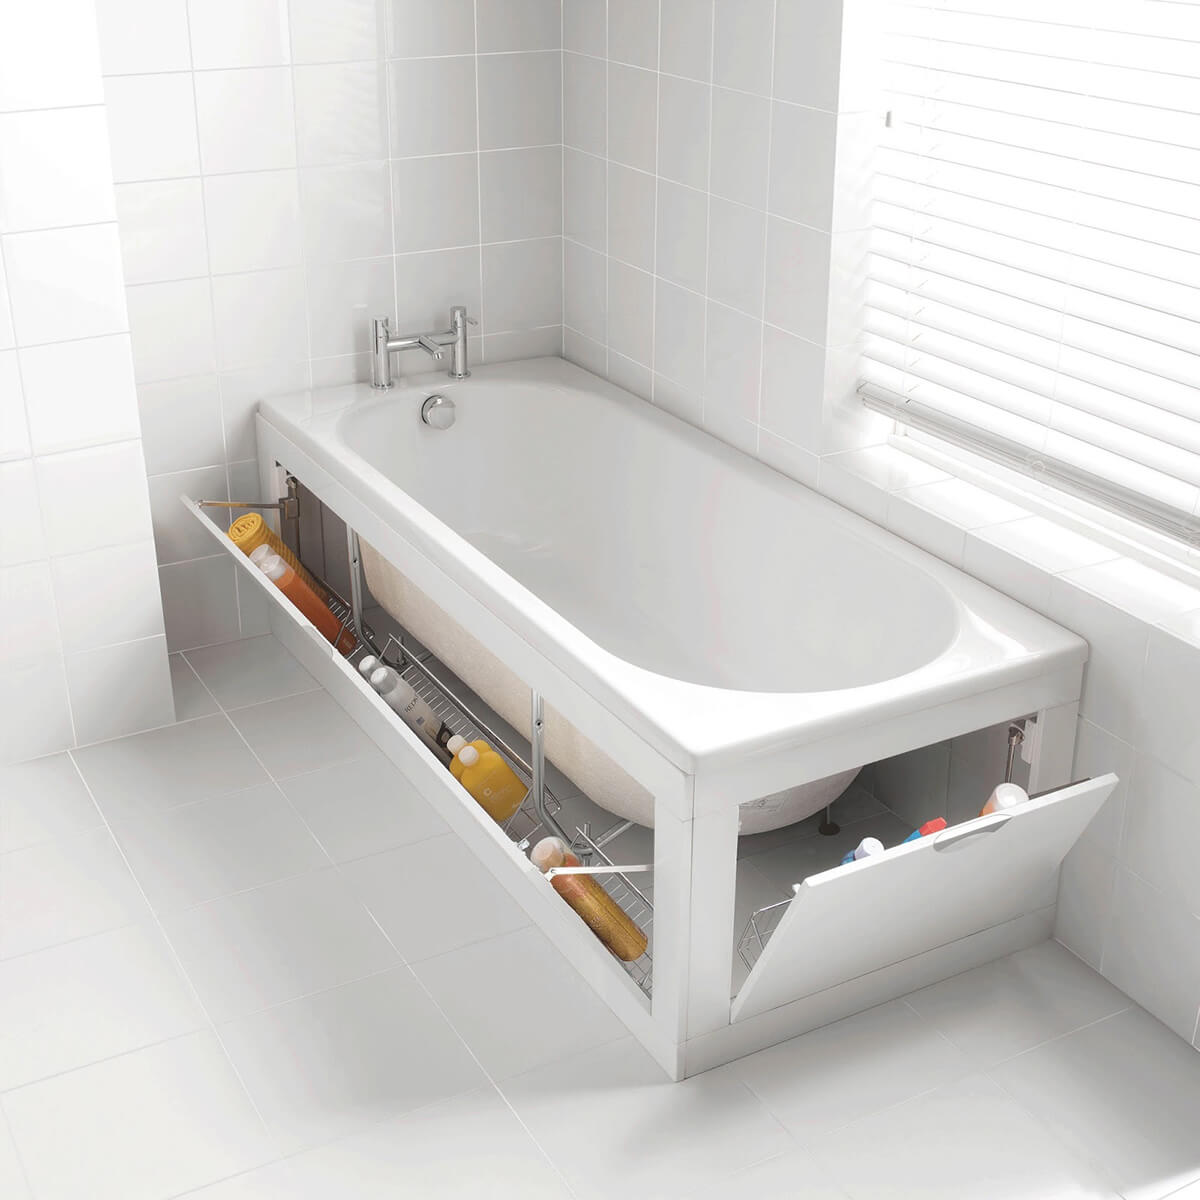 Ingenious Bathtub Storage for Small Bathrooms